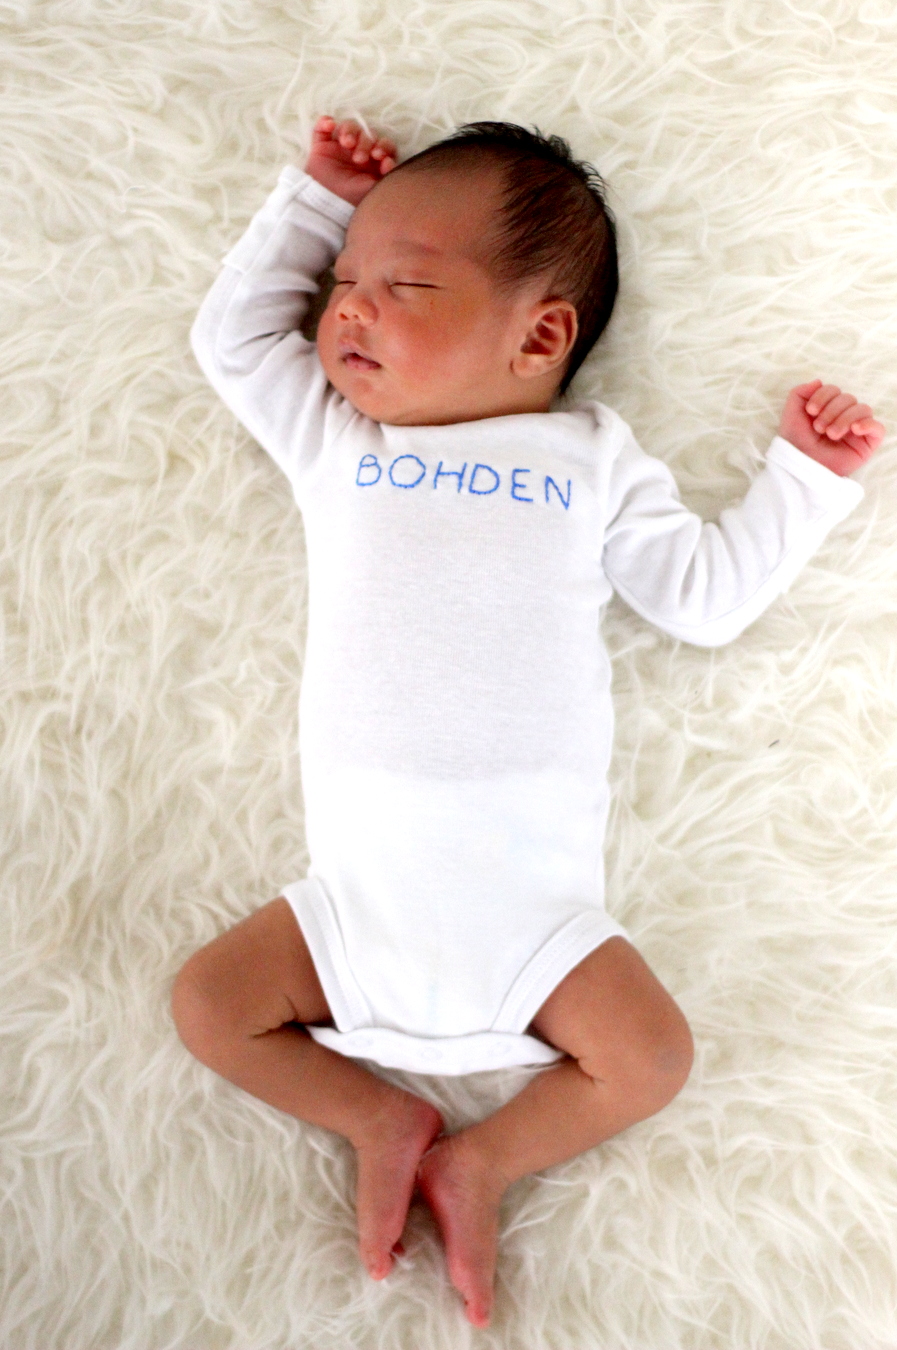 introducing baby Bohden!